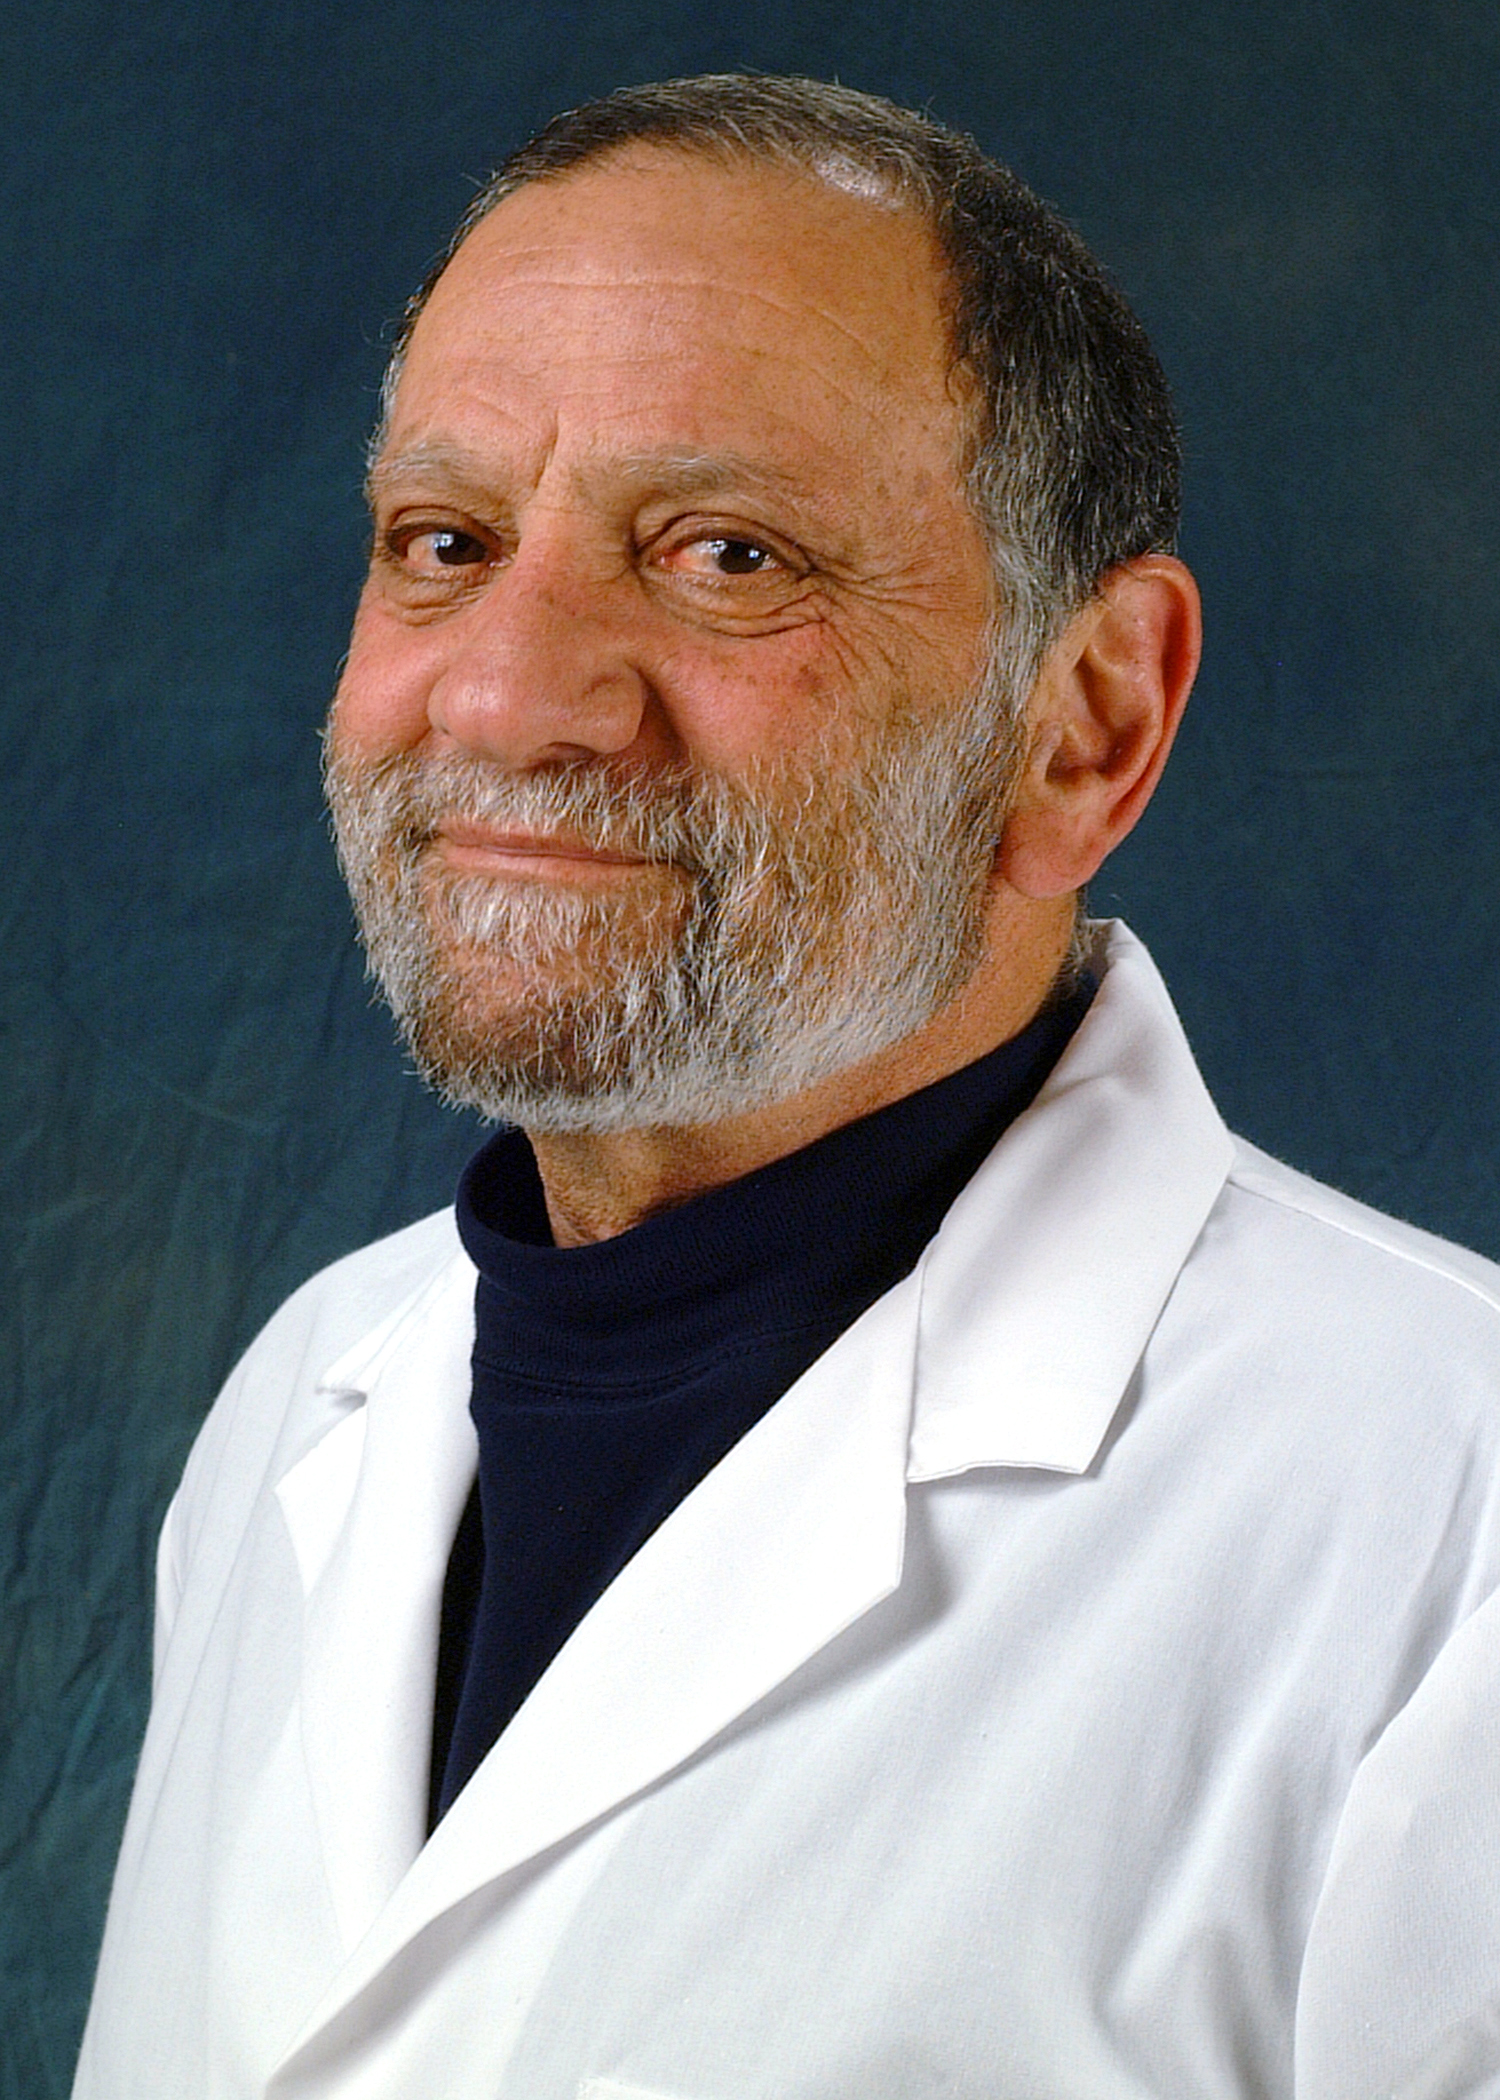 Dr. Donald Barber